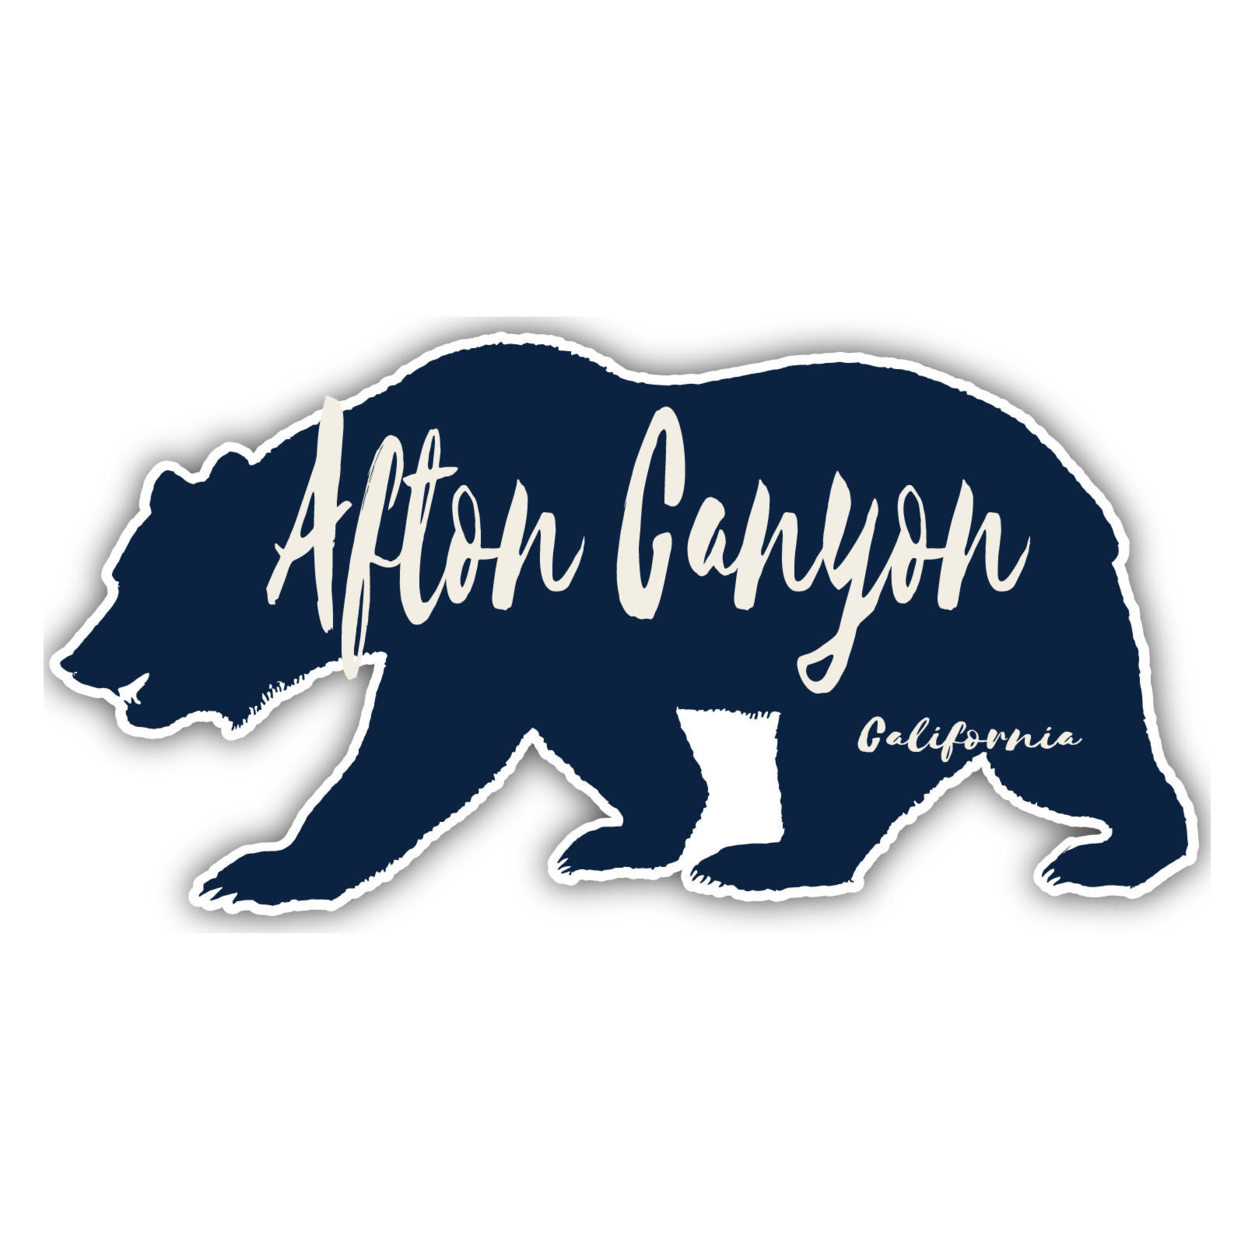 Afton Canyon California Souvenir Decorative Stickers (Choose Theme And Size) - Single Unit, 10-Inch, Bear